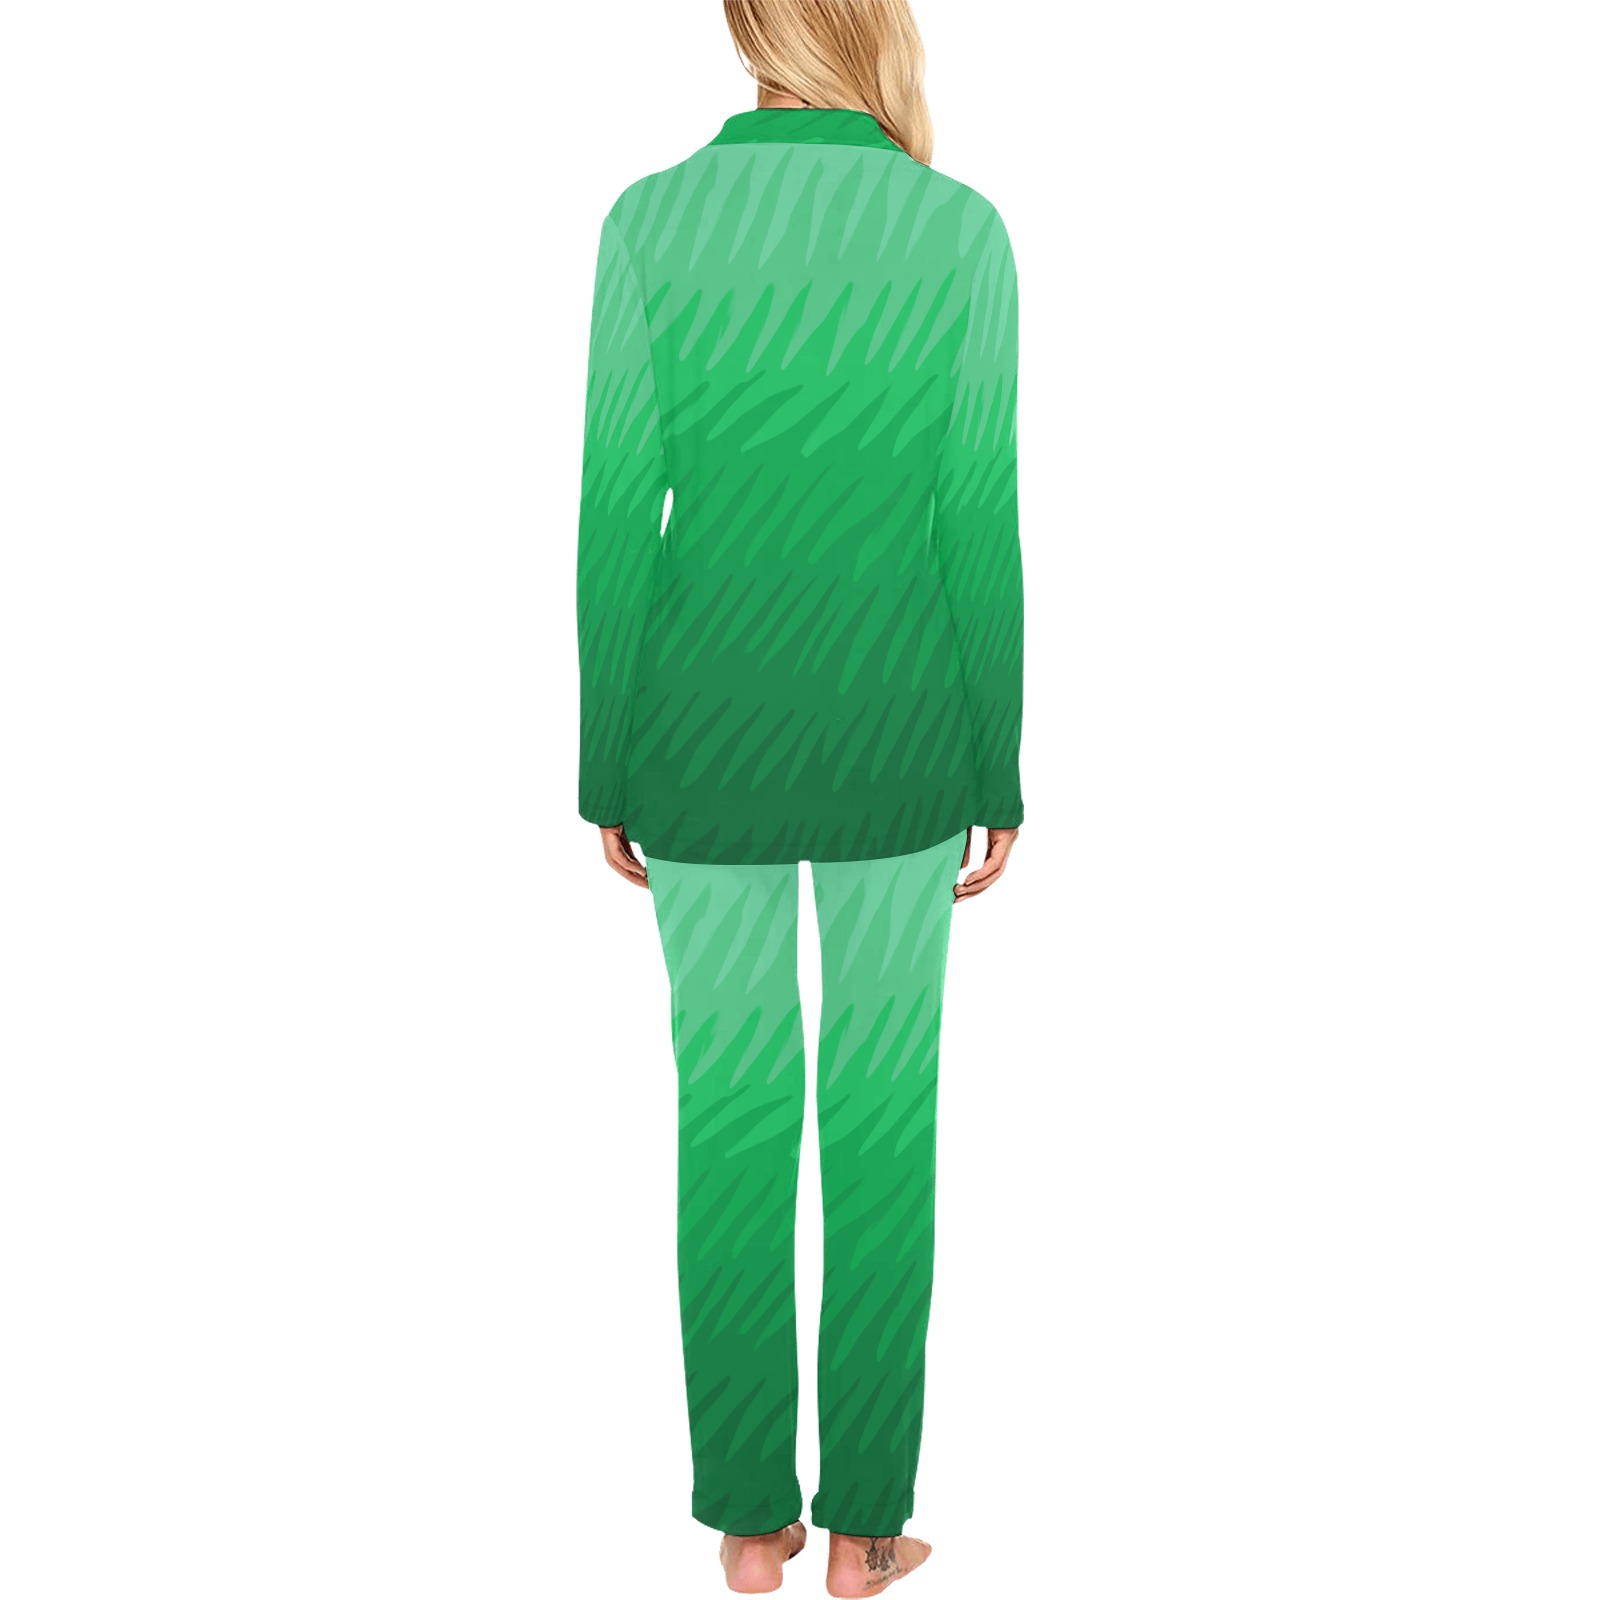 green wavespike Women's Long Pajama Set